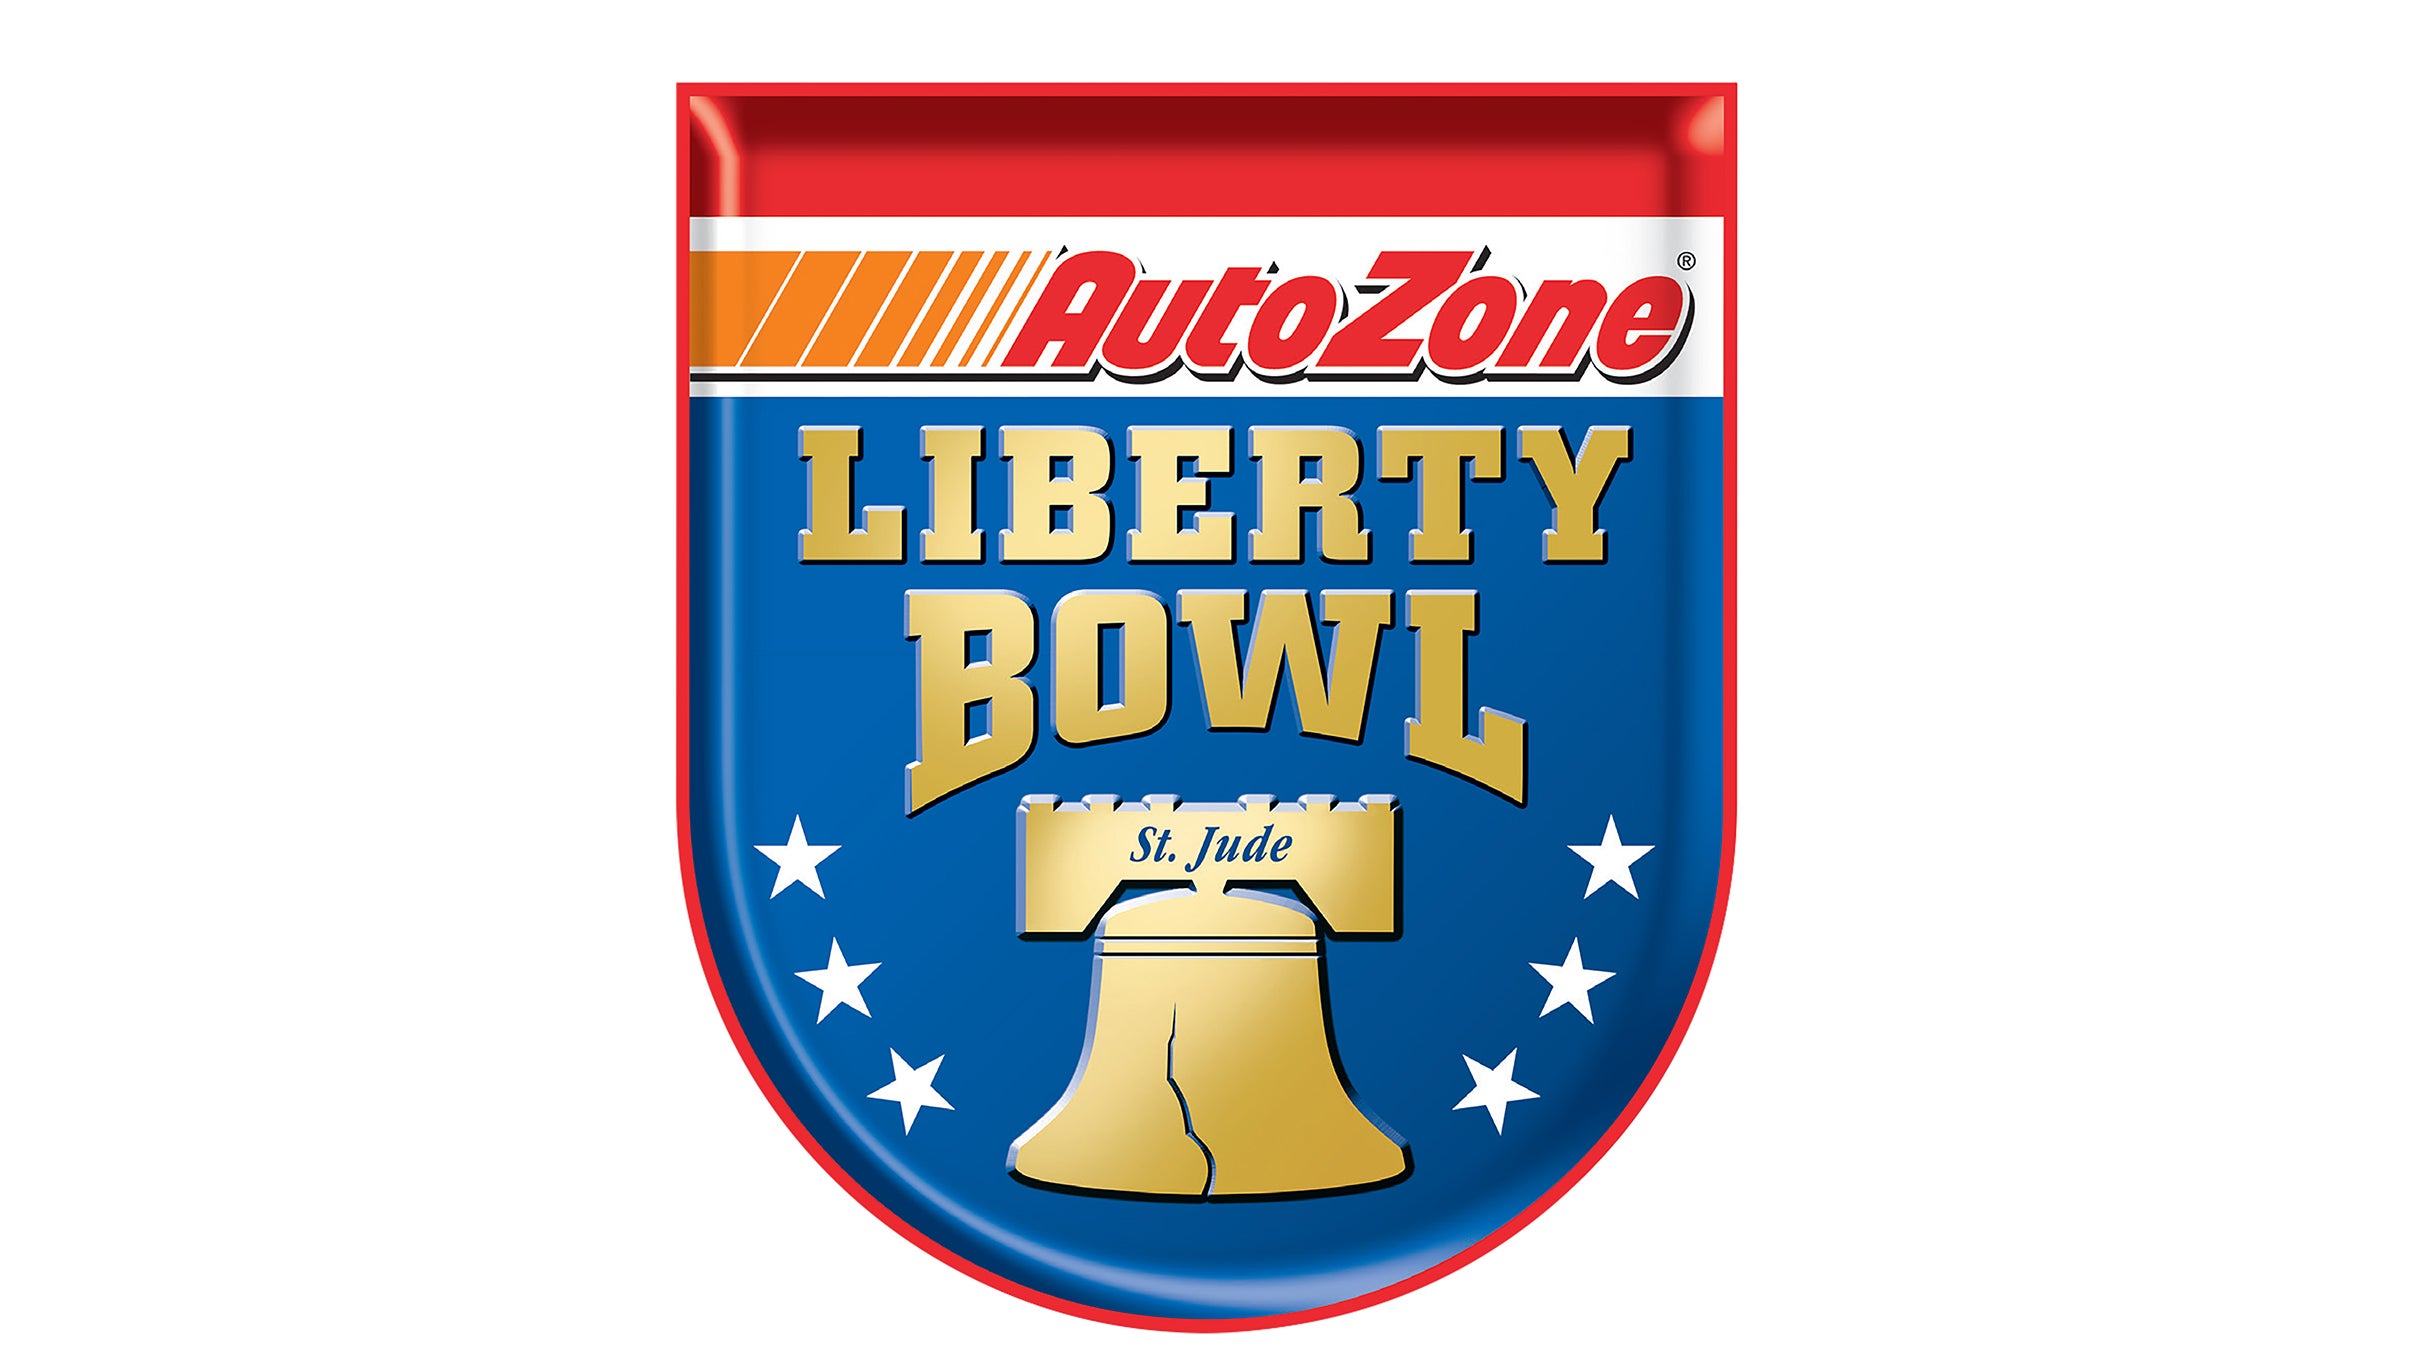 66th AutoZone Liberty Bowl hero